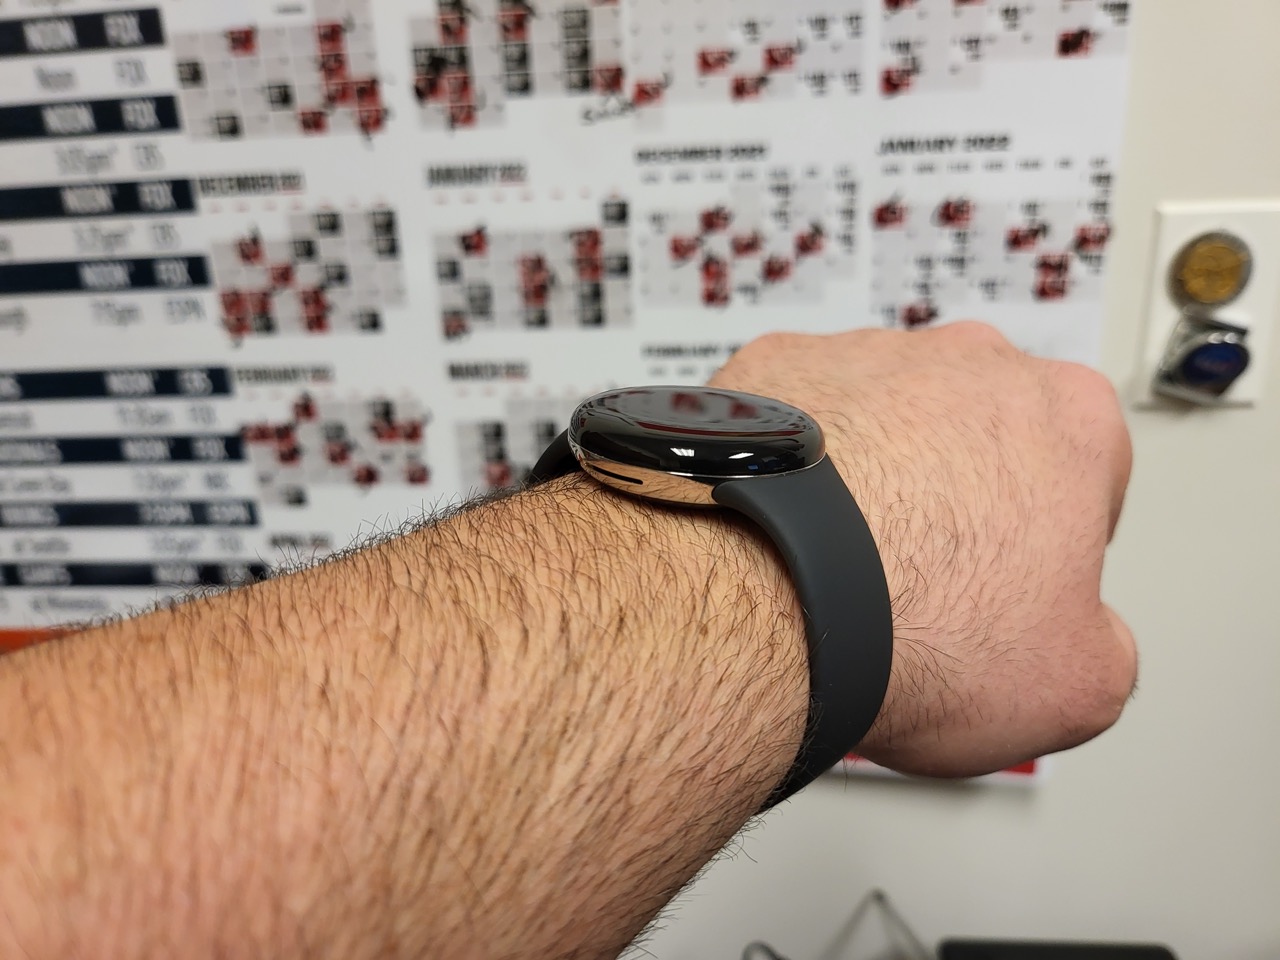 Pixel Watchの装着写真が公開。「これまでの時計で最も快適」と高評価